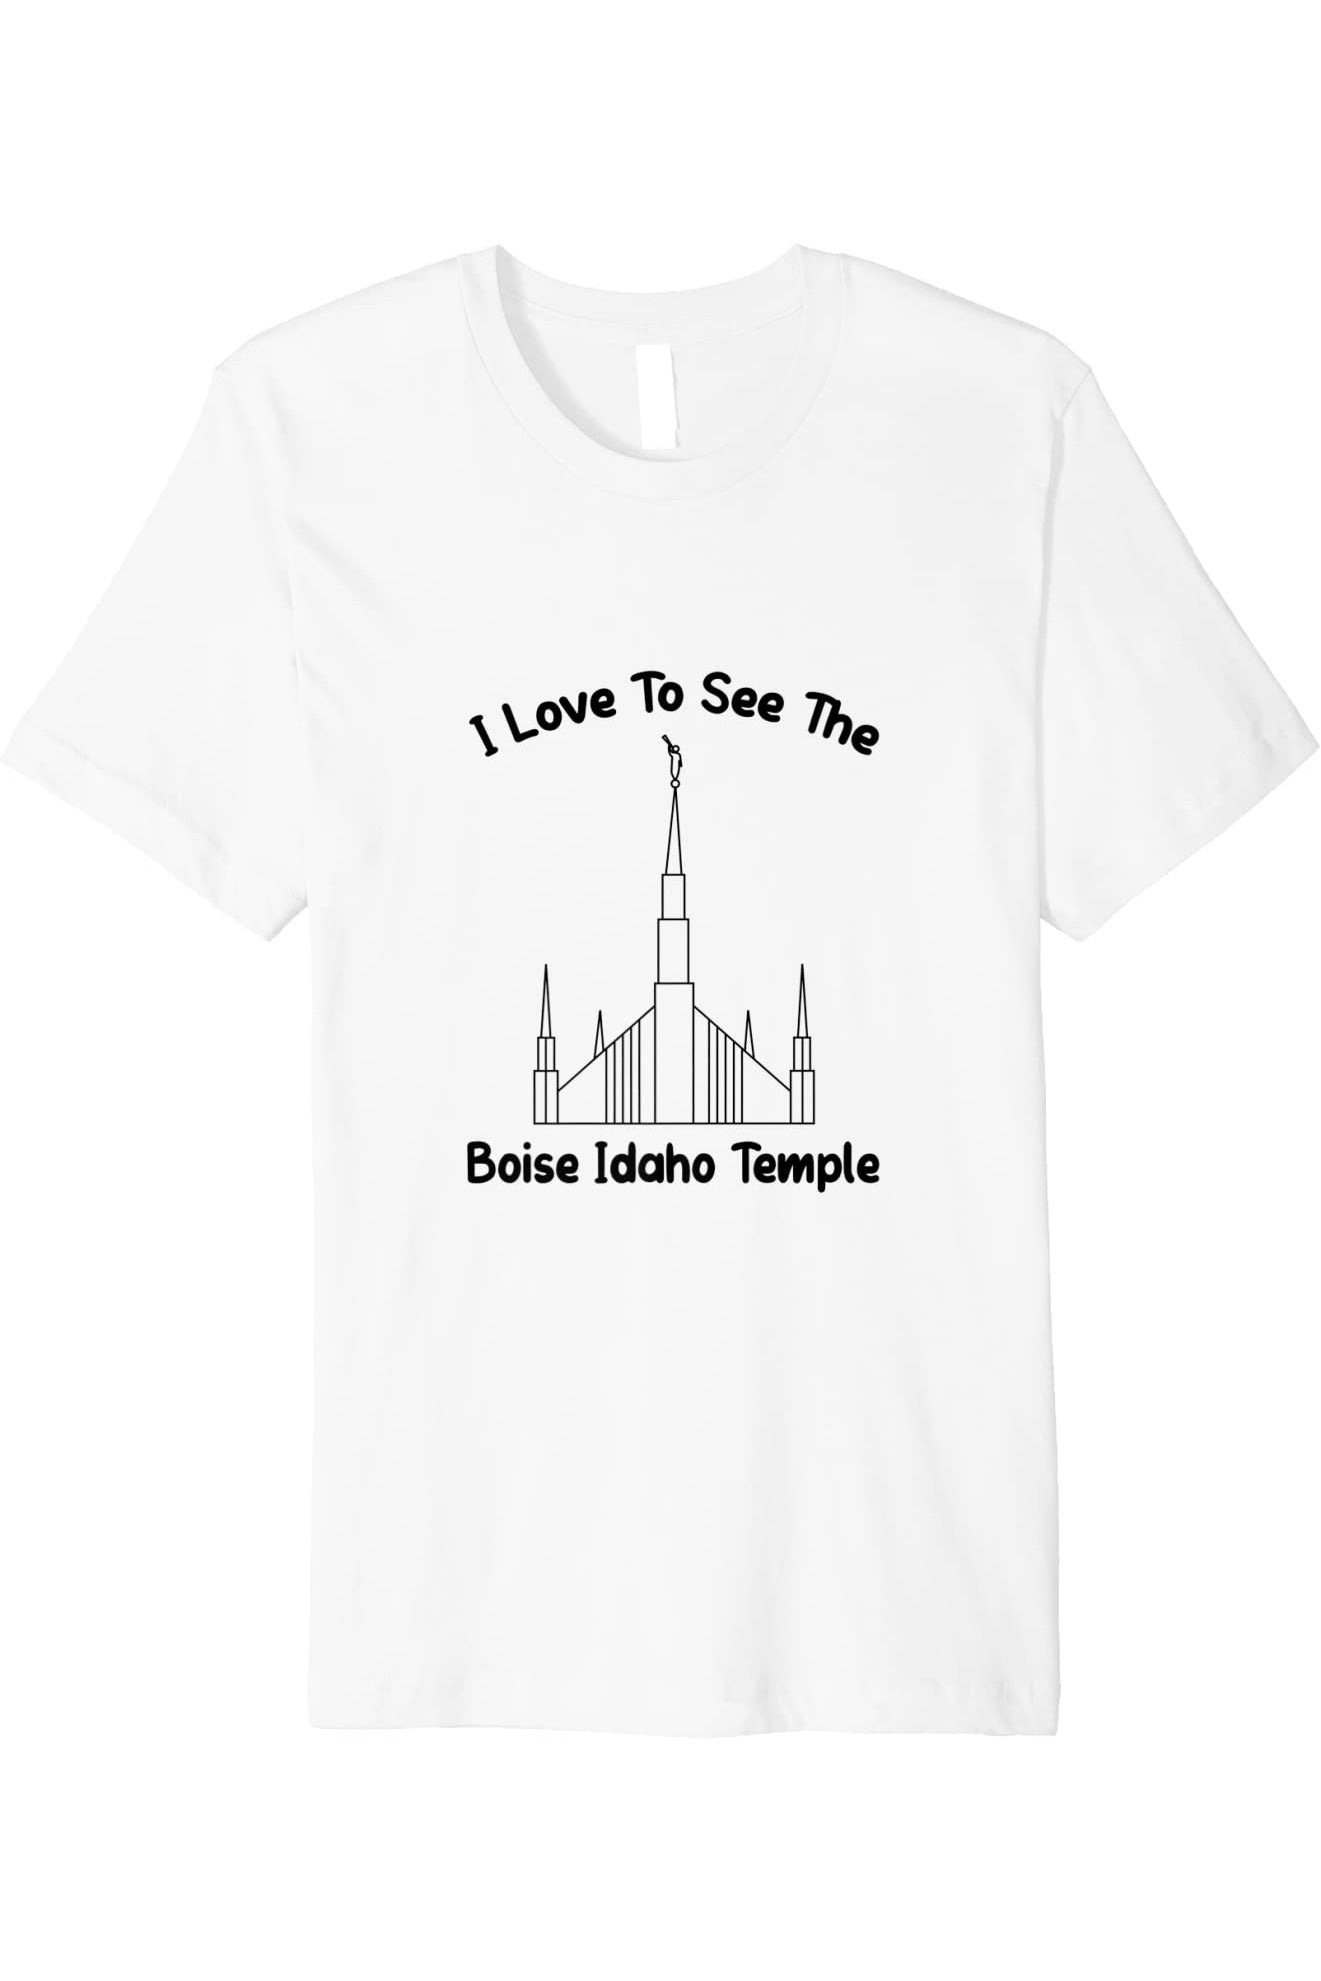 Boise Idaho Temple T-Shirt - Premium - Primary Style (English) US